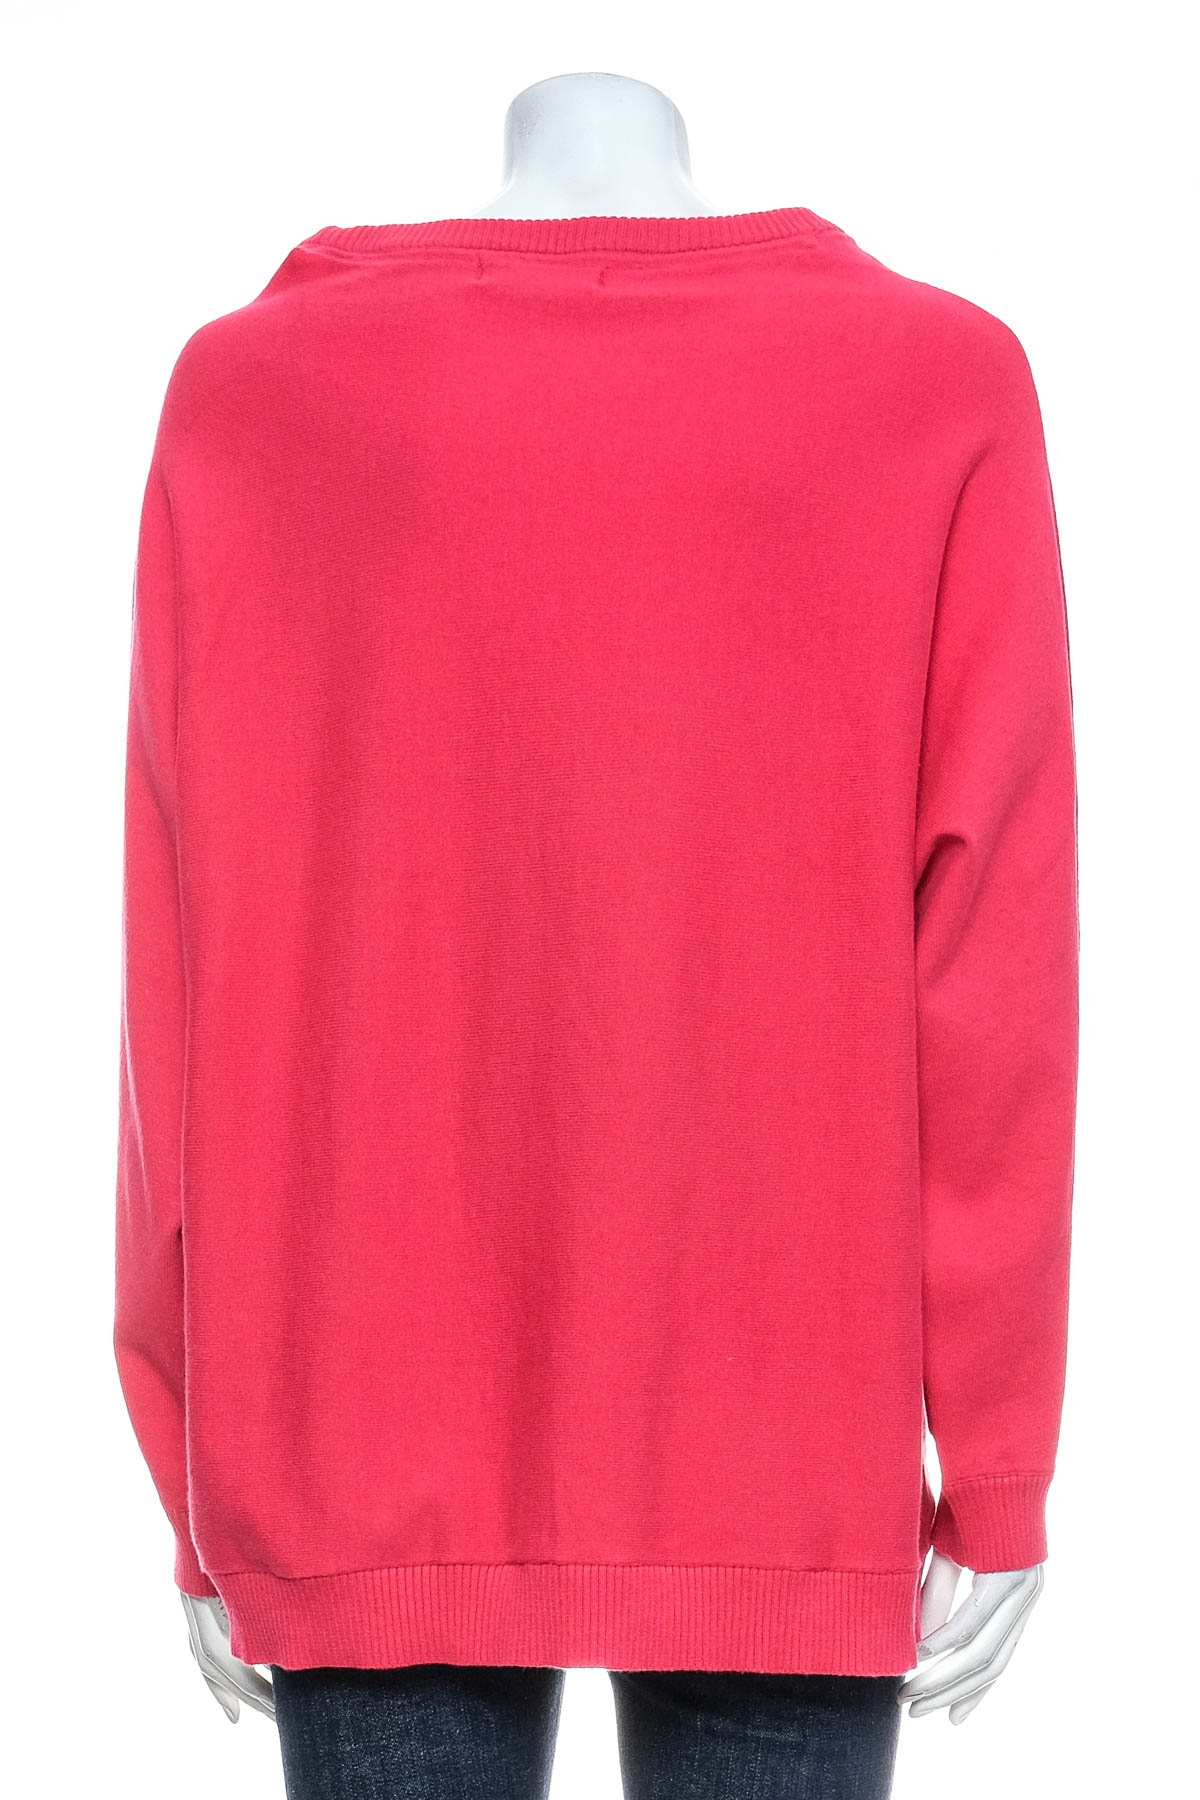 Дамски пуловер - Bpc selection bonprix collection - 1